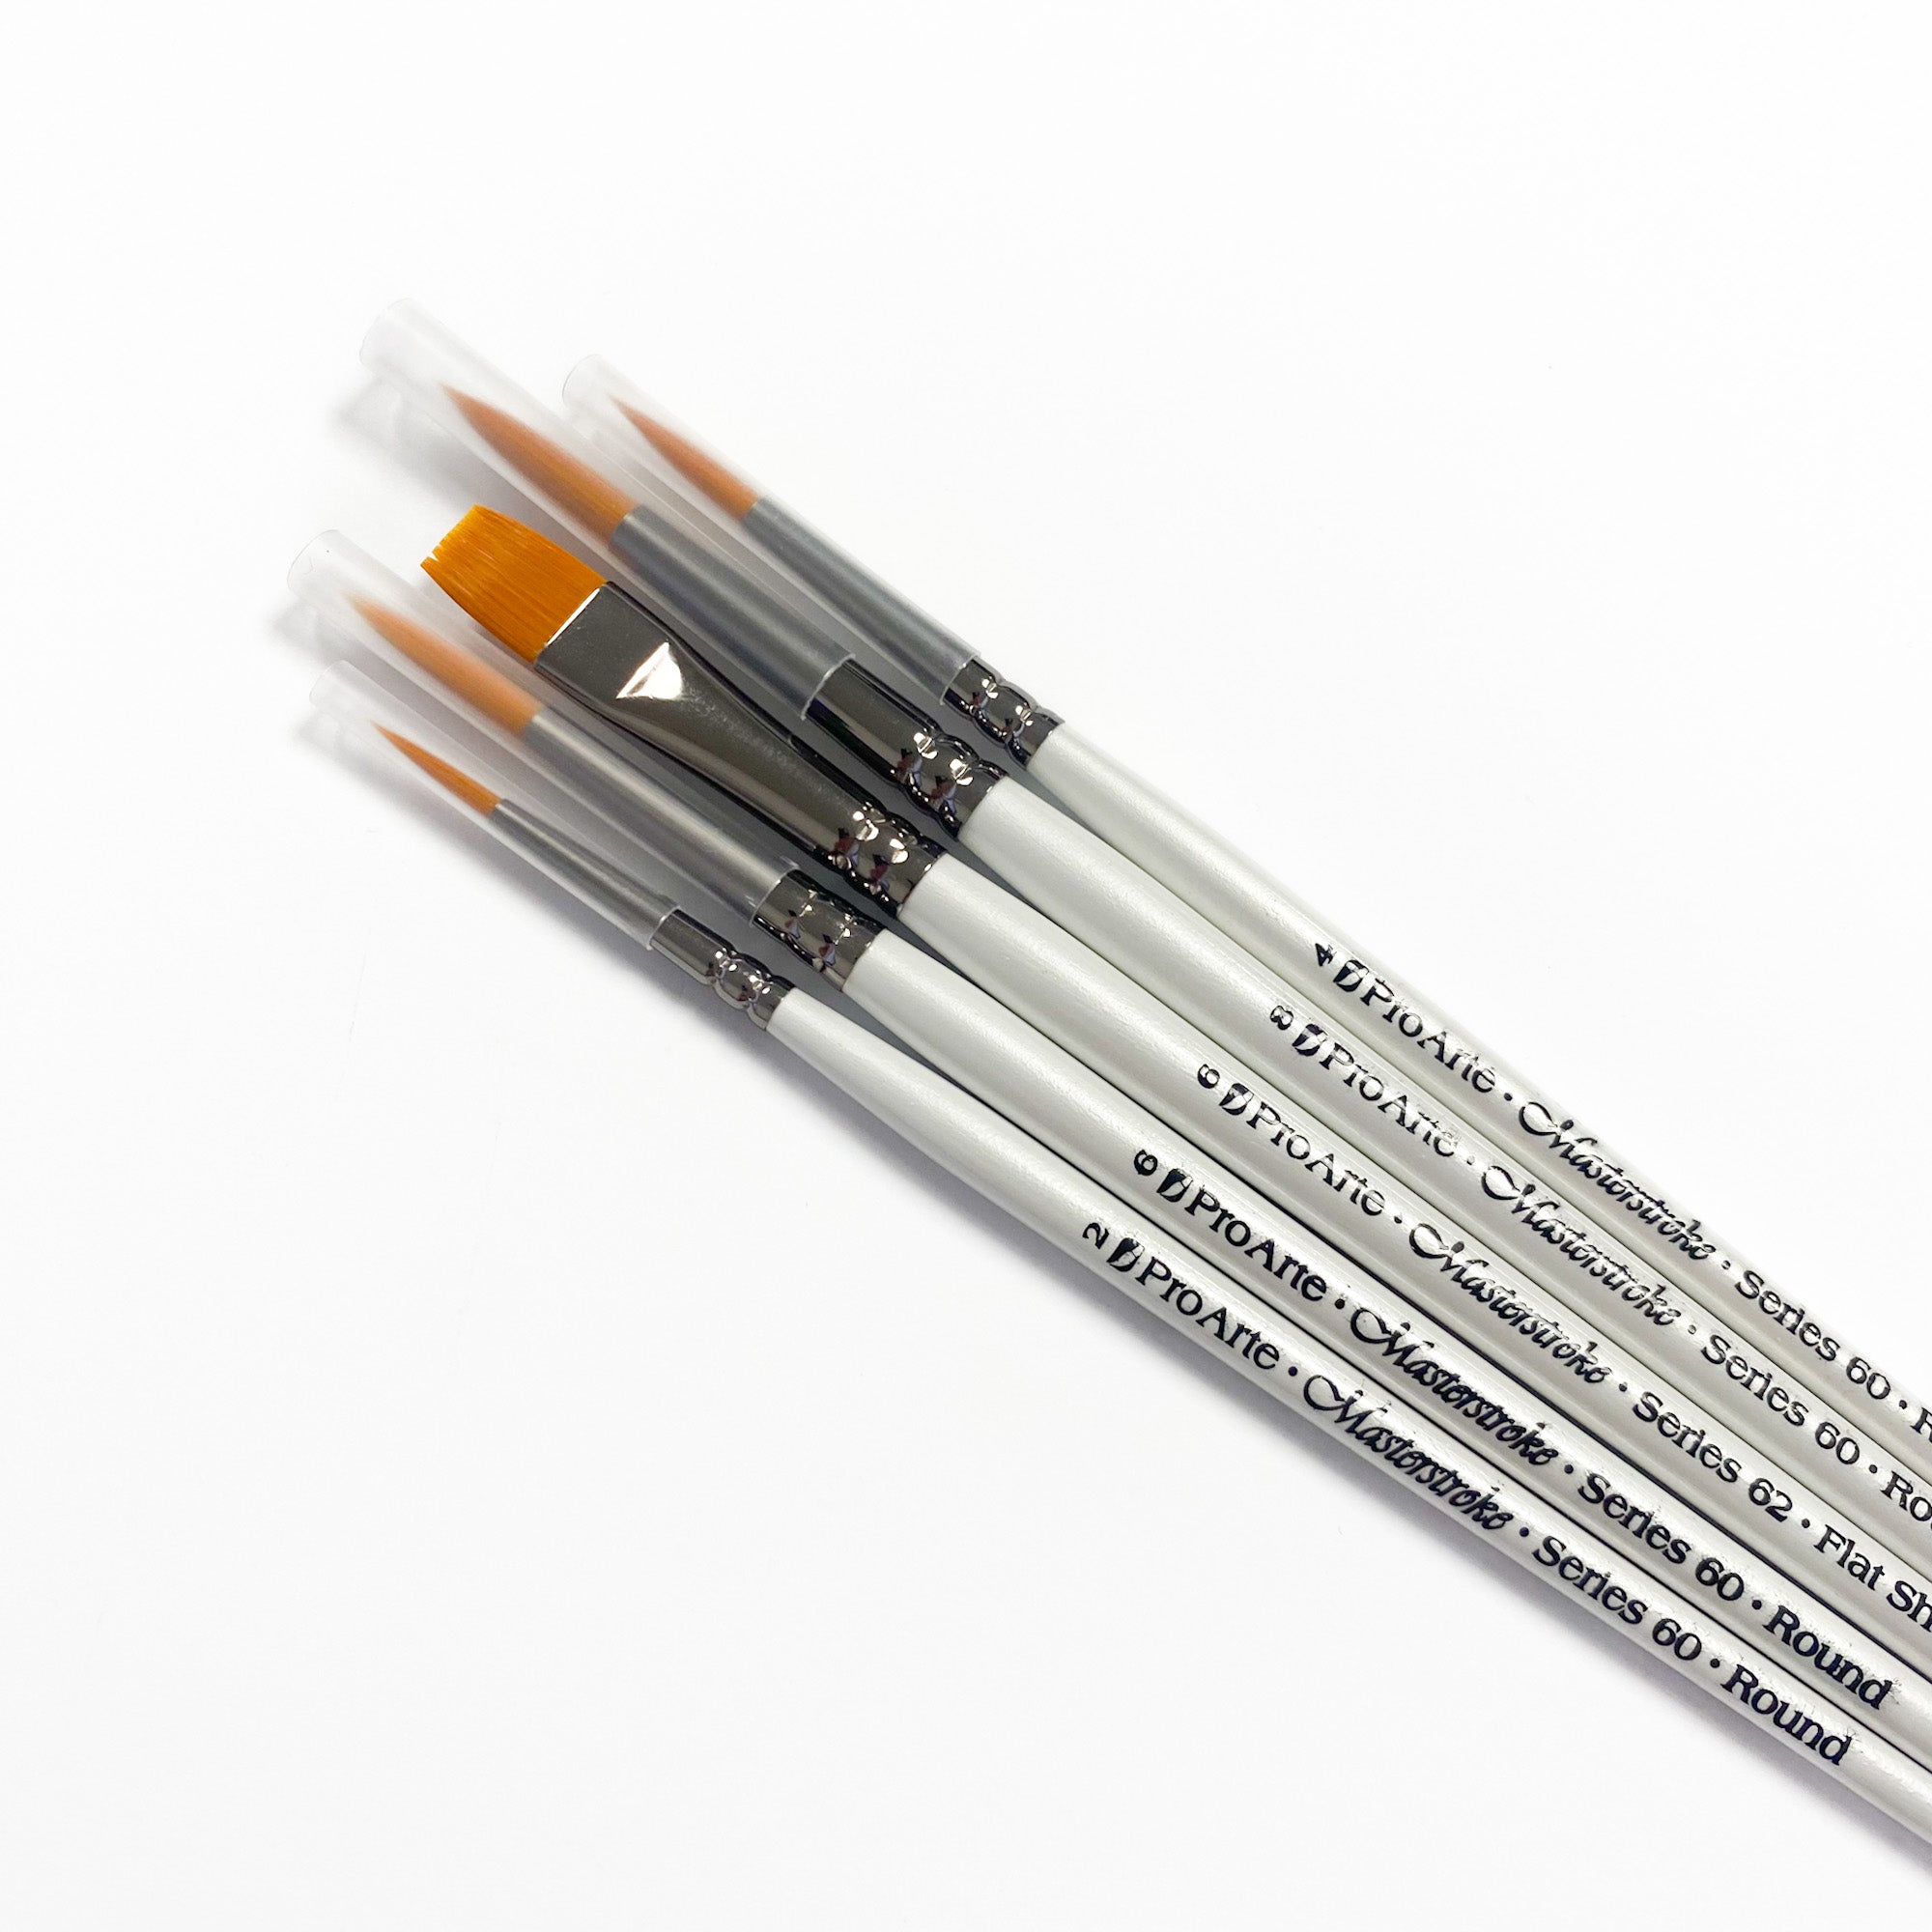 Pro Arte Masterstroke Series MSC Wallet - Set of 5 Brushes